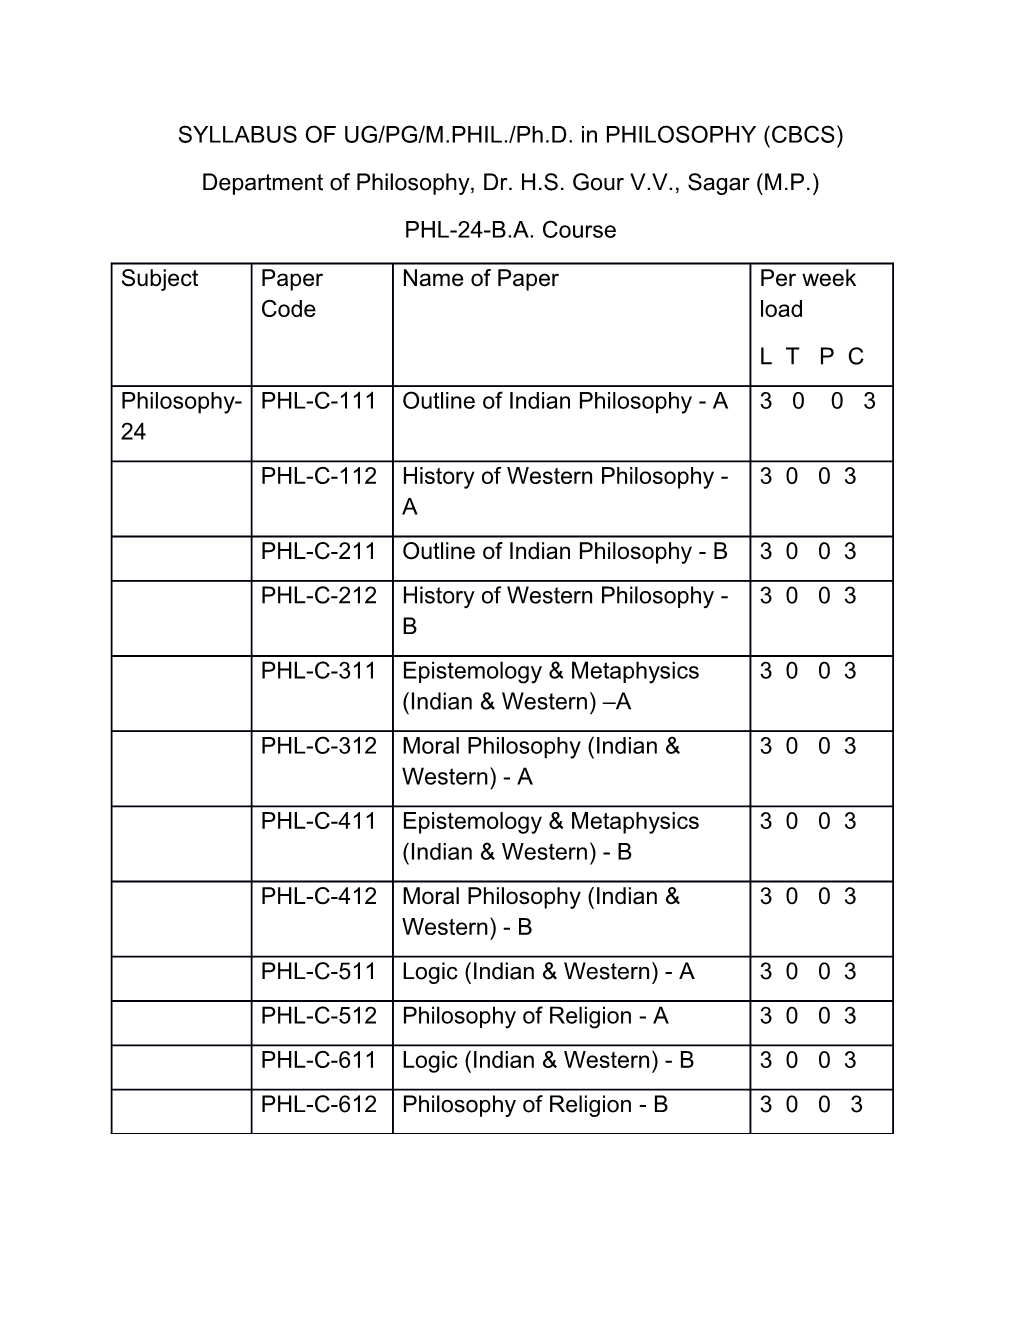 SYLLABUS of UG/PG/M.PHIL./Ph.D. in PHILOSOPHY (CBCS)